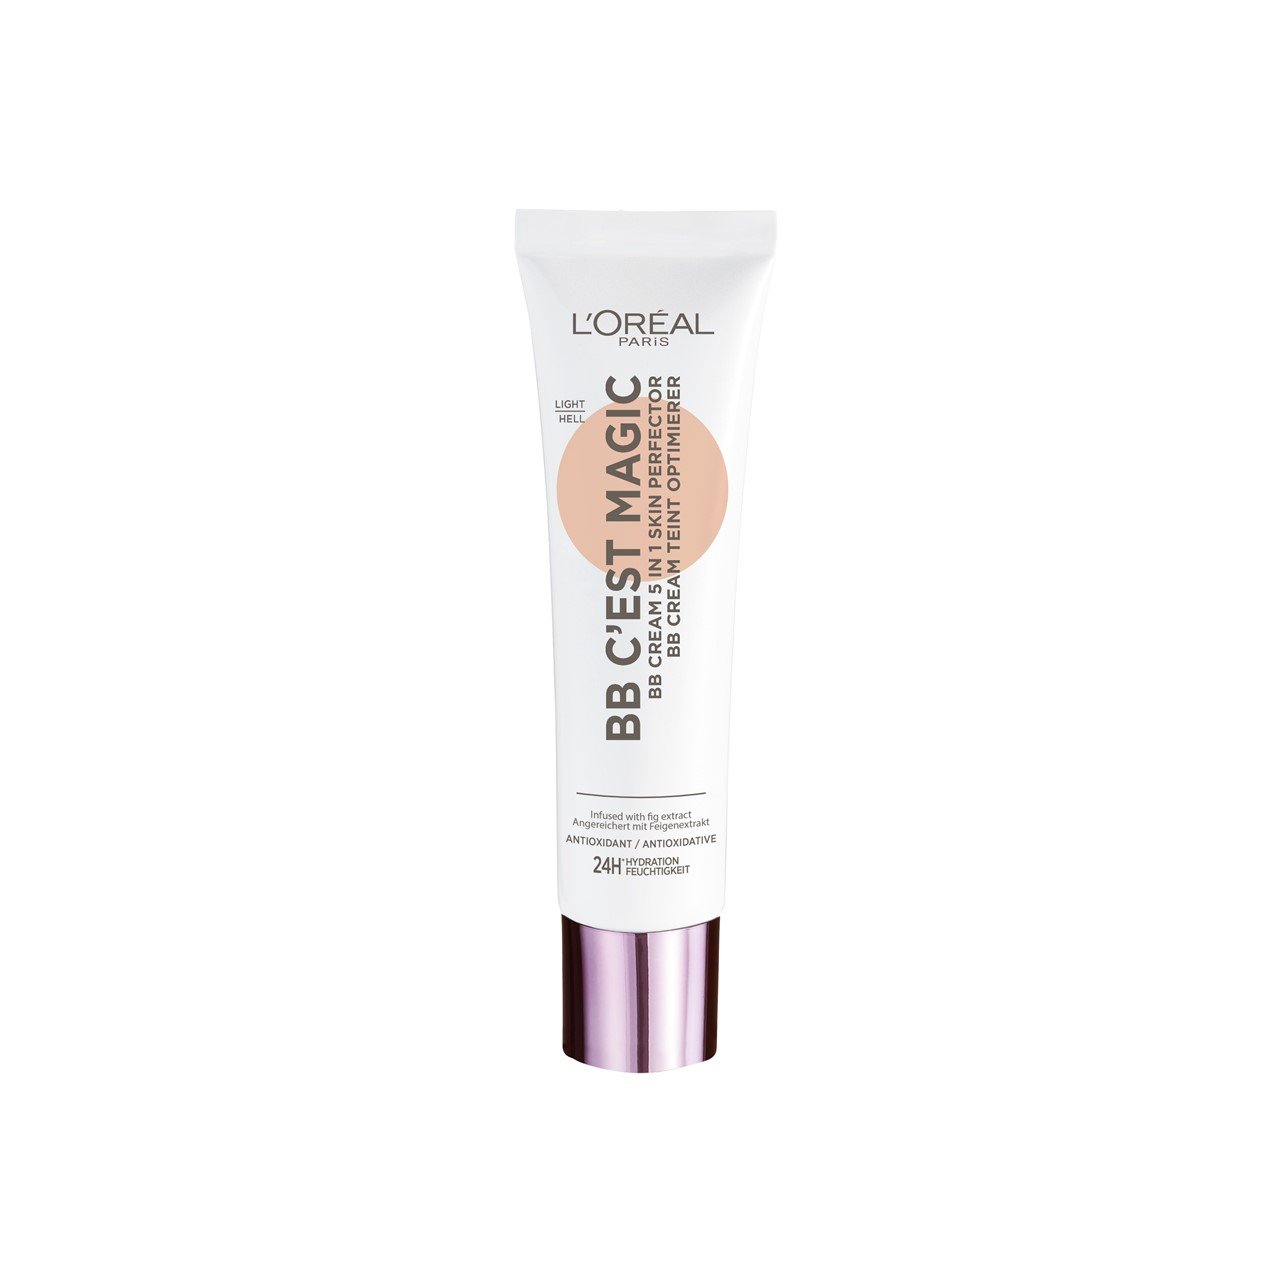 L'Oréal Paris C'est Magic BB Cream 02 Light 30ml (1.01fl oz)